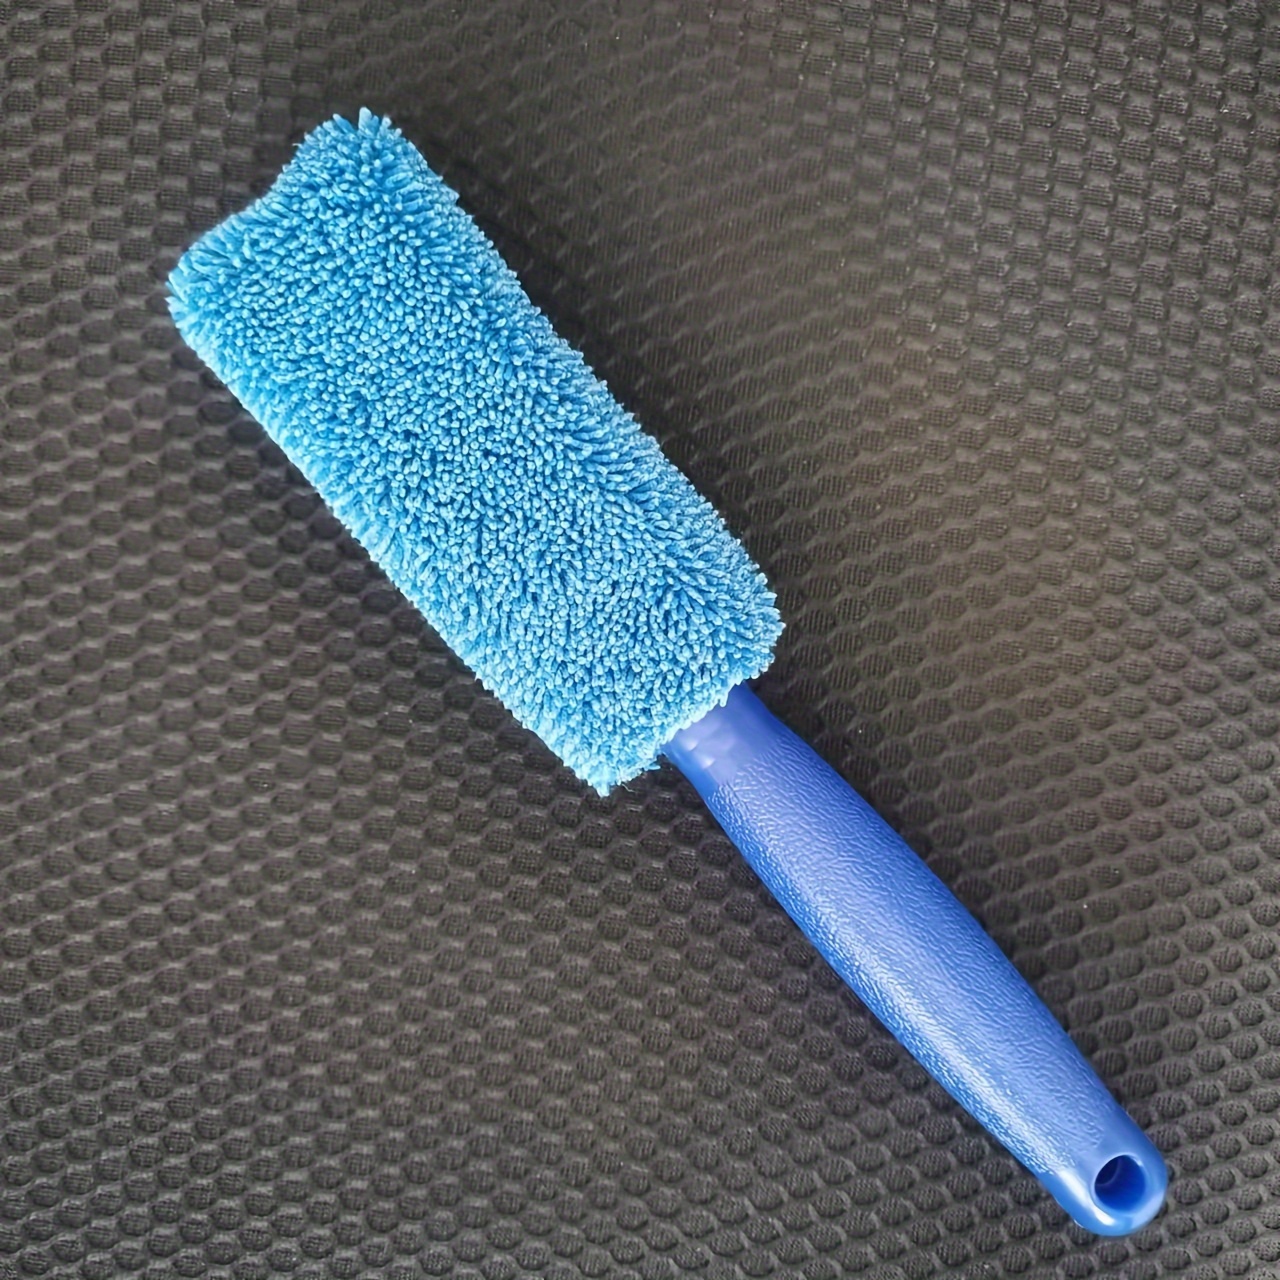 1pc Car Wheel Cleaning Brush